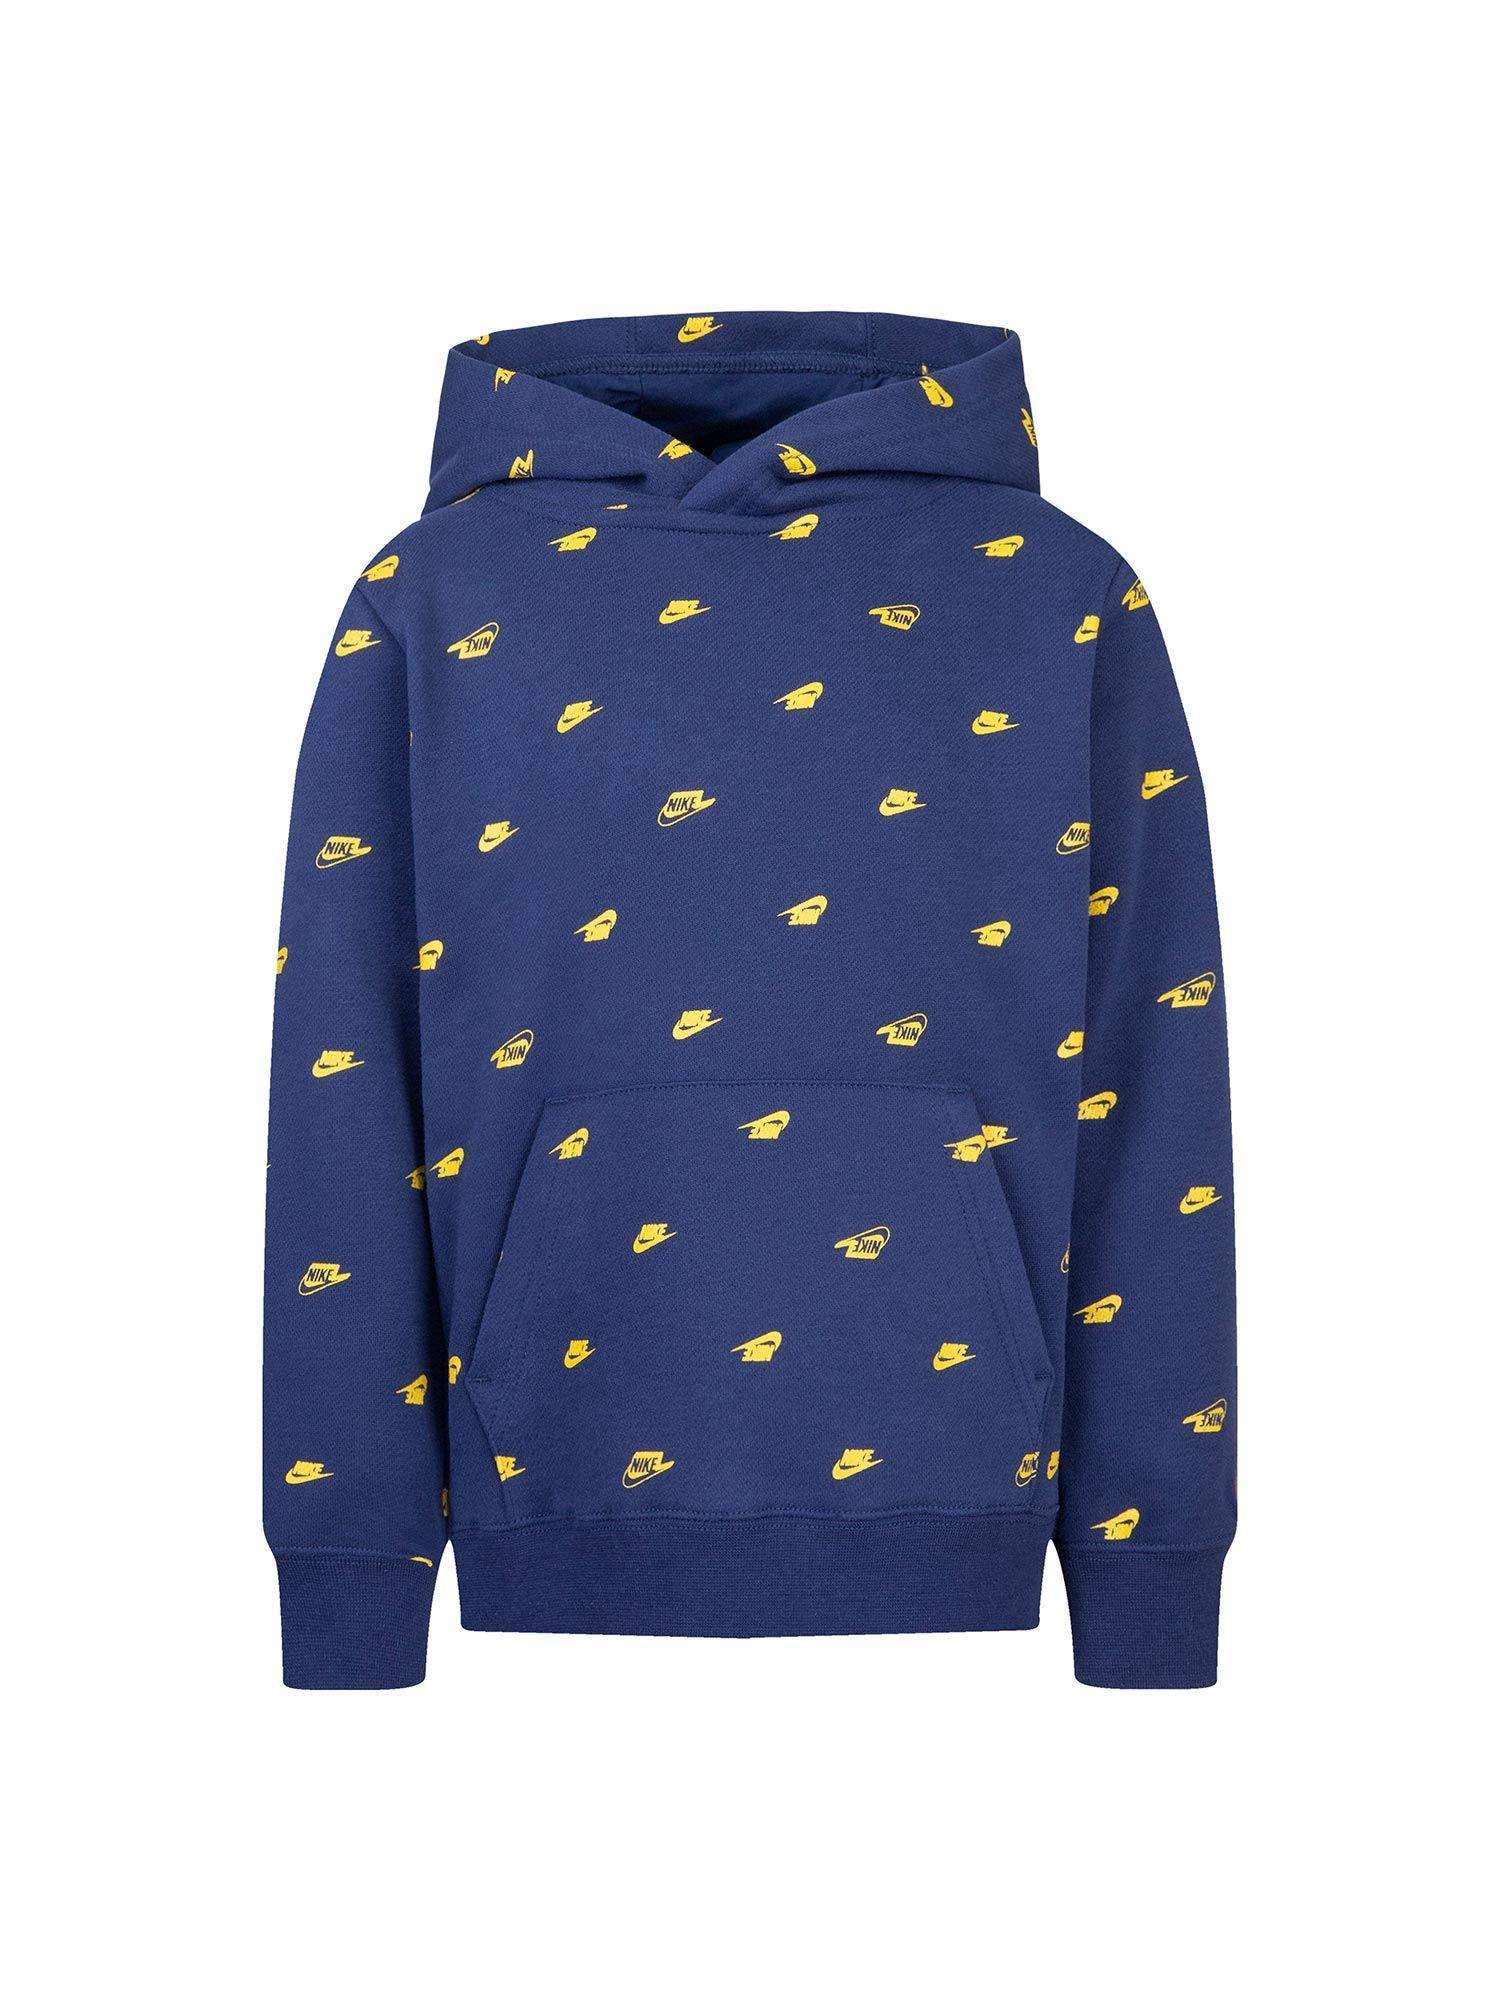 boys-navy-blue-printed-sweatshirts